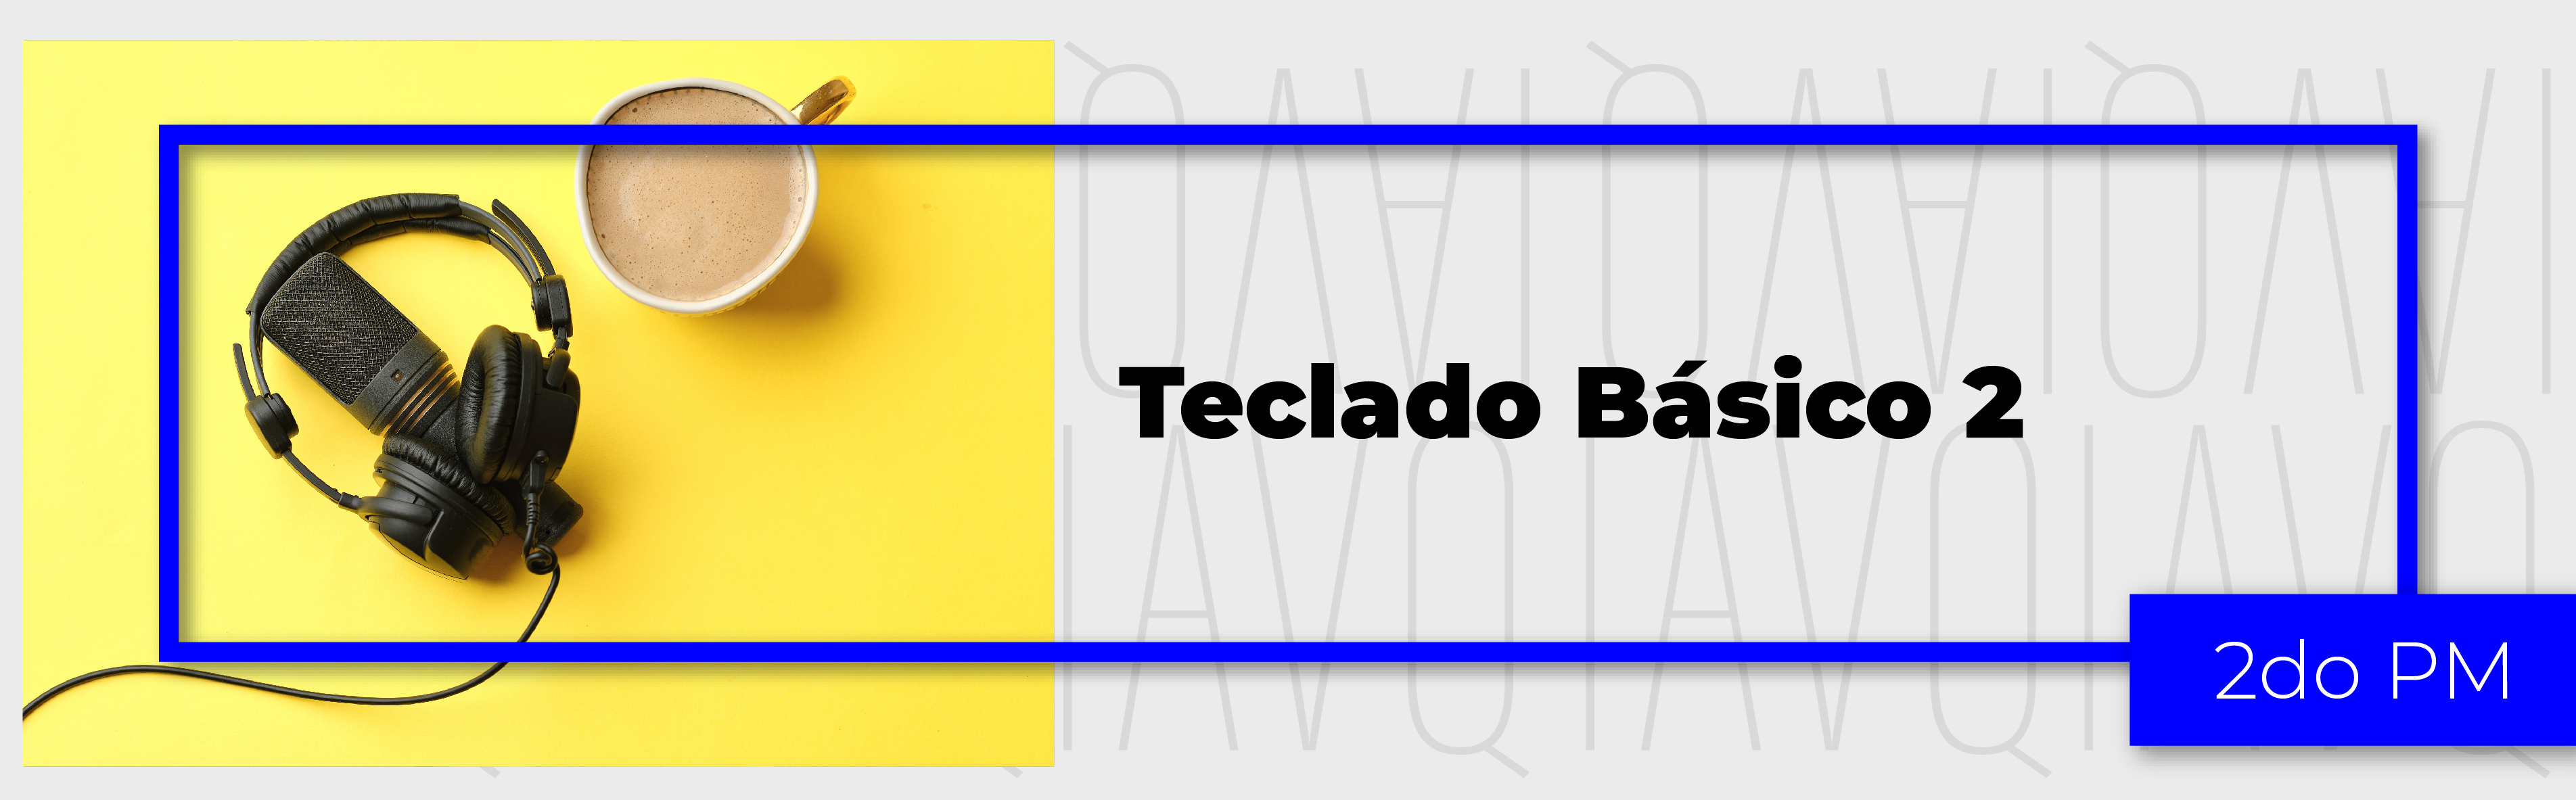 PA_24-24_PM_S_2_Teclado_Basico_2